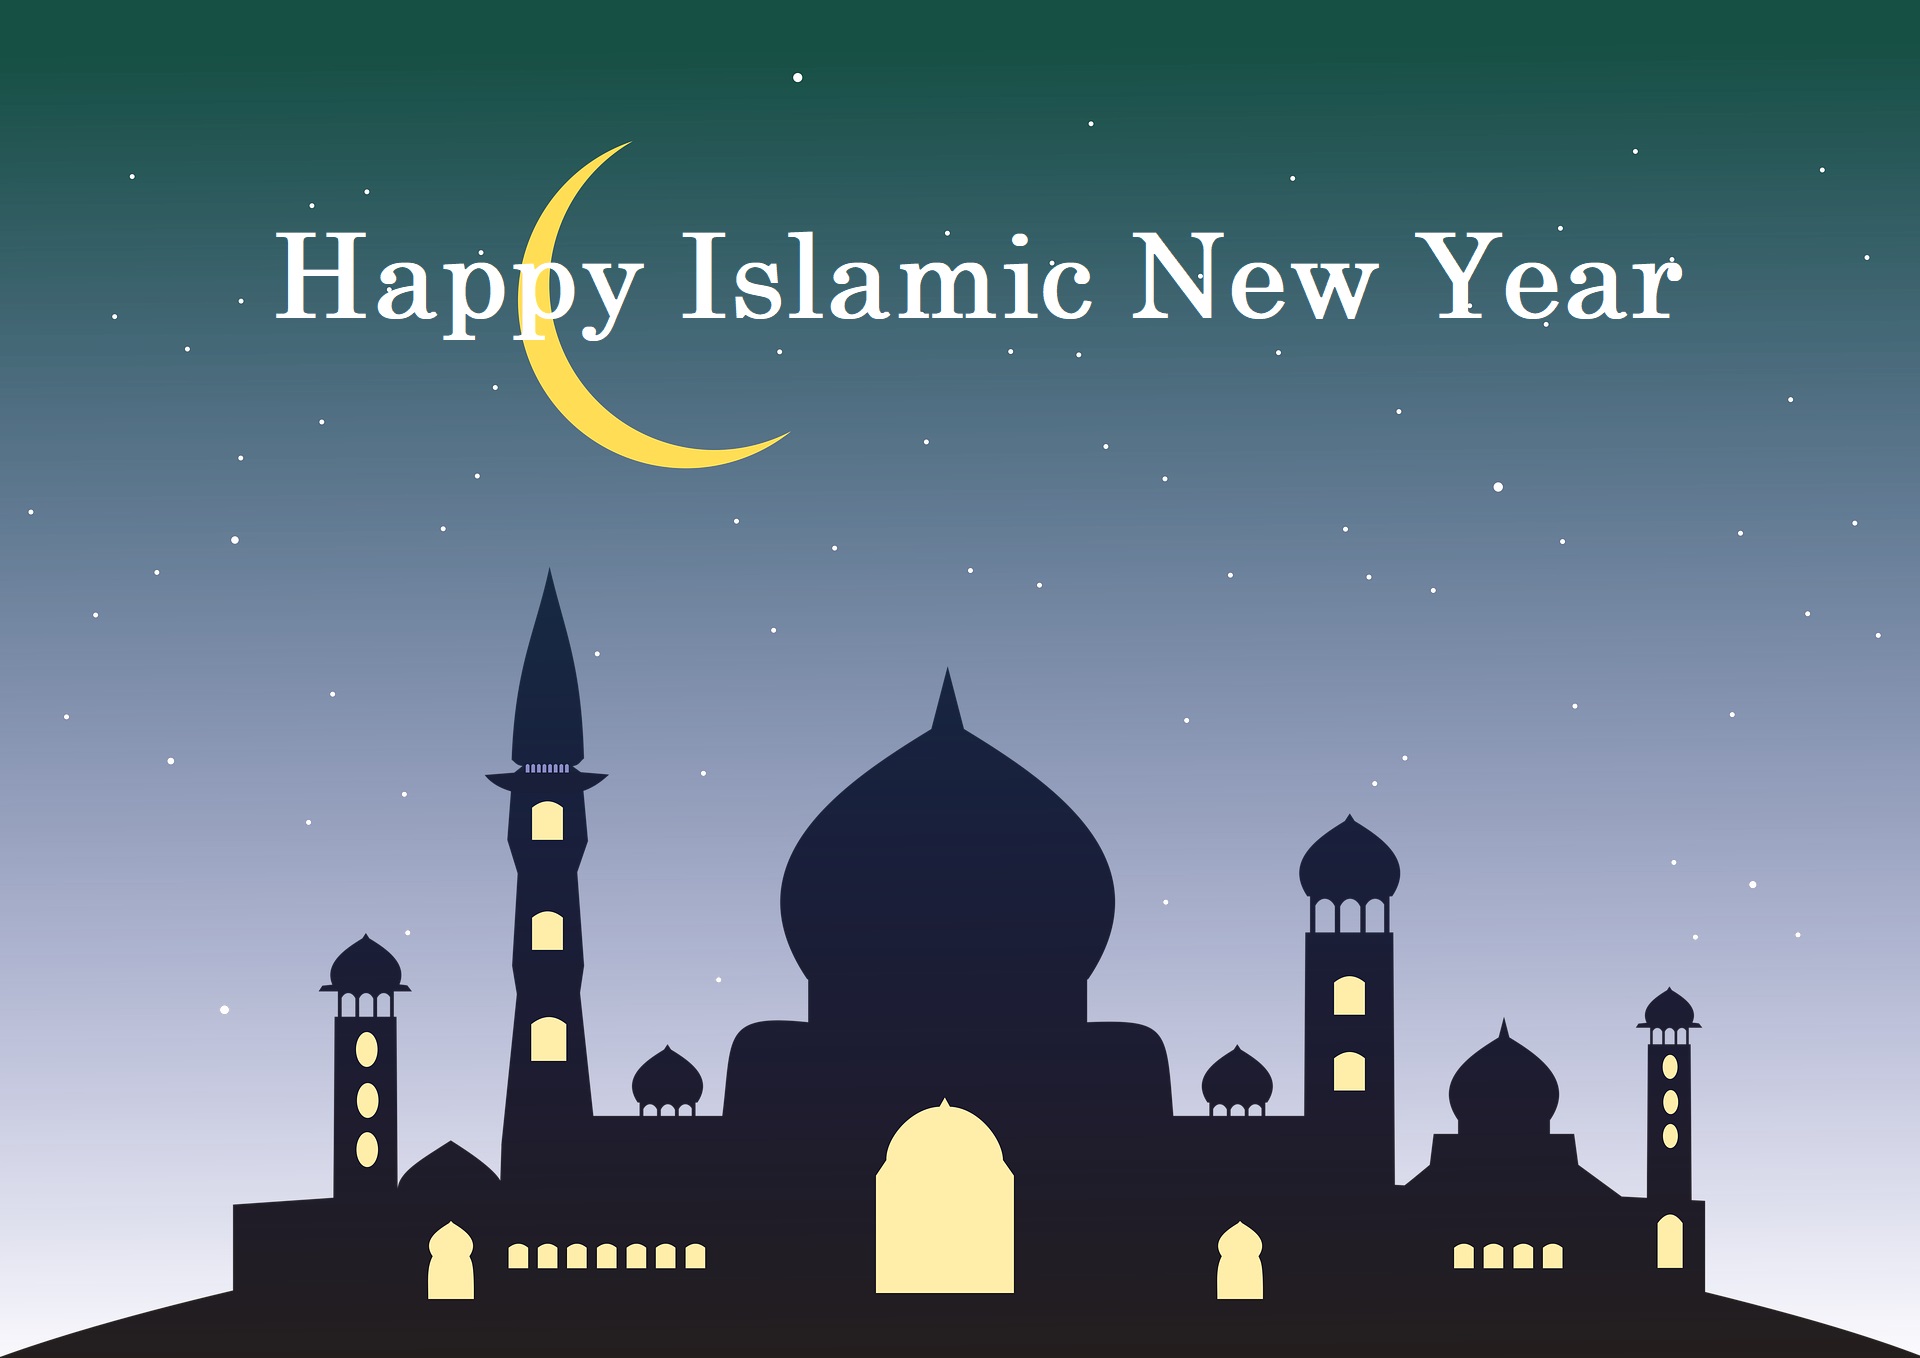 Islamic New Year 2021 Wishes Quotes Message Shayari Quotes Status In Arabic Urdu English Hindi Happy Islamic Muslim Hijri New Year Greeting Message Quotes इस्लामिक न्यू ईयर 2021 / इस्लामी नया साल मुबारक